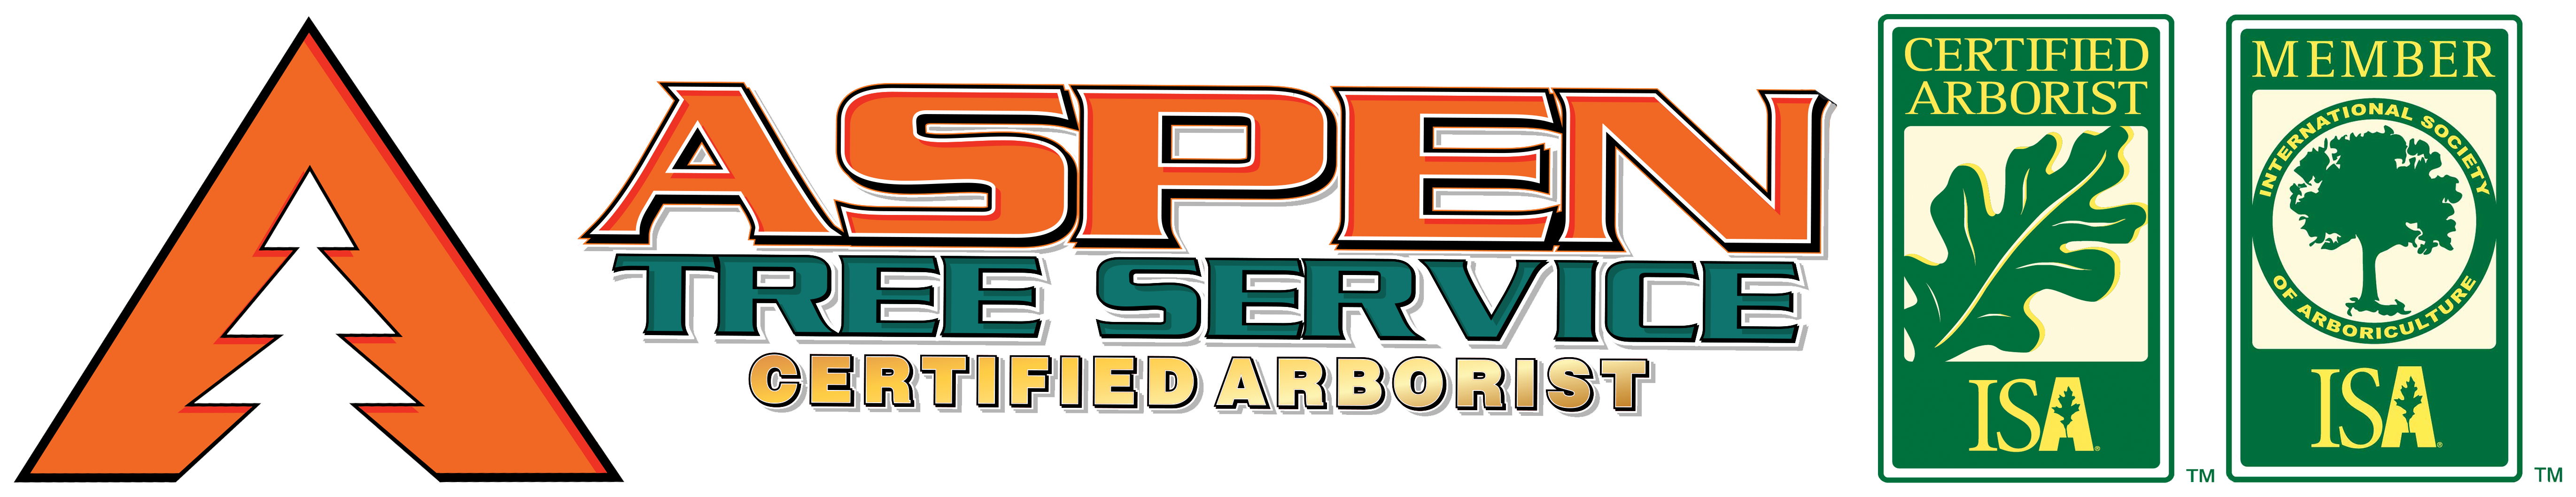 Aspen Tree Service